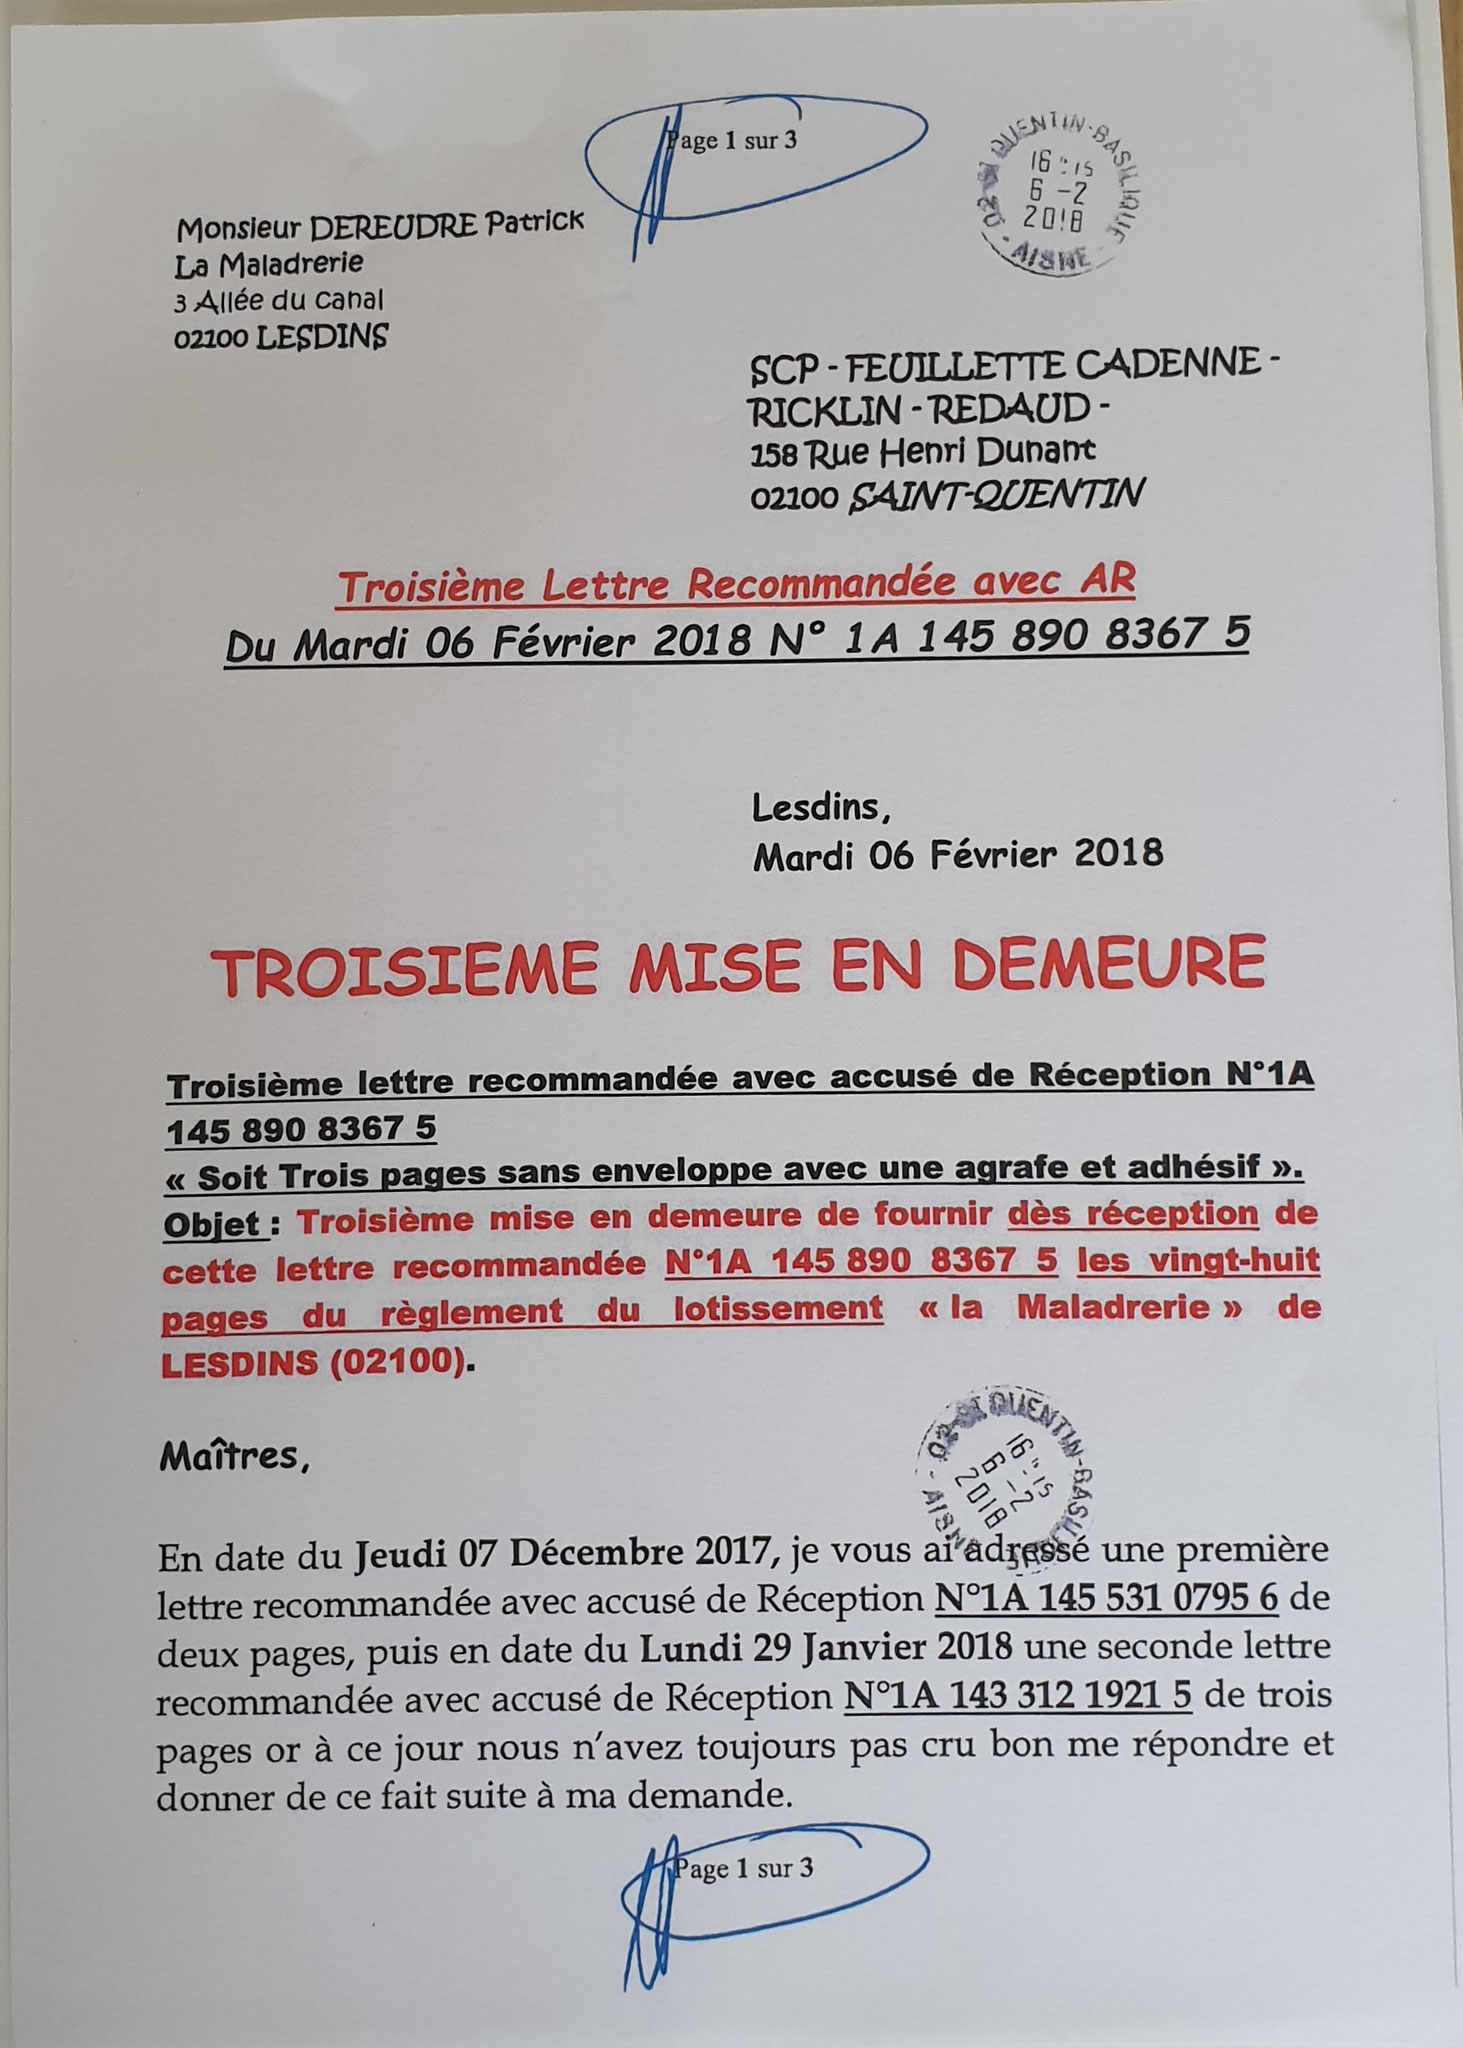 Le 06 Février 2018 Troisième LRAR N0 1A 145 890 8367 5 (trois pages) www.jenesuispasunchien.fr www.jesuisvictime.fr www.jesuispatrick.fr